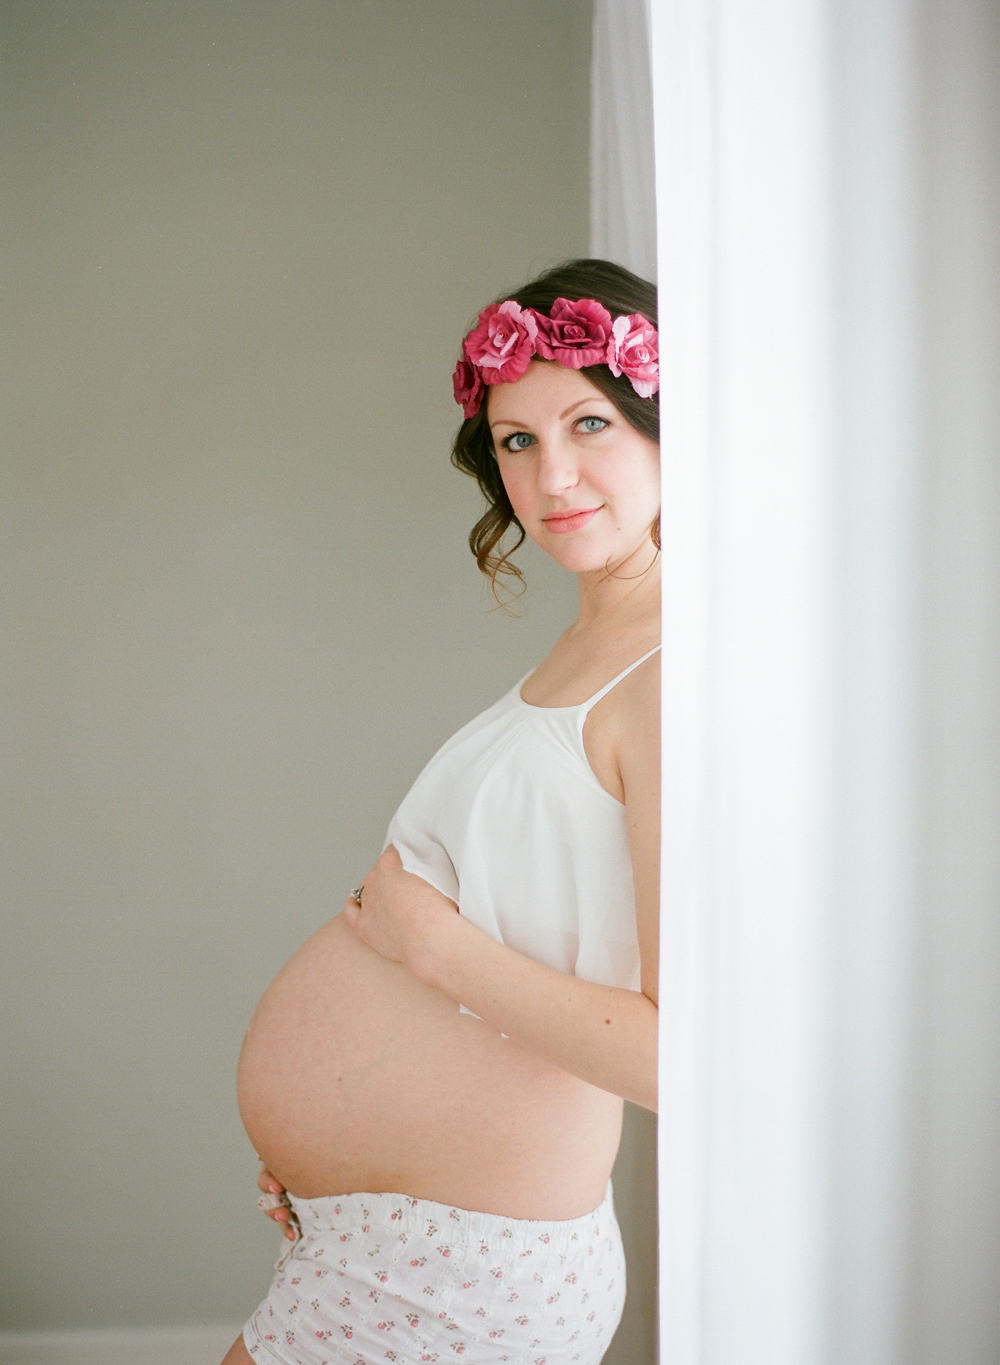 wausau-maternity-photography-film-014.jpg